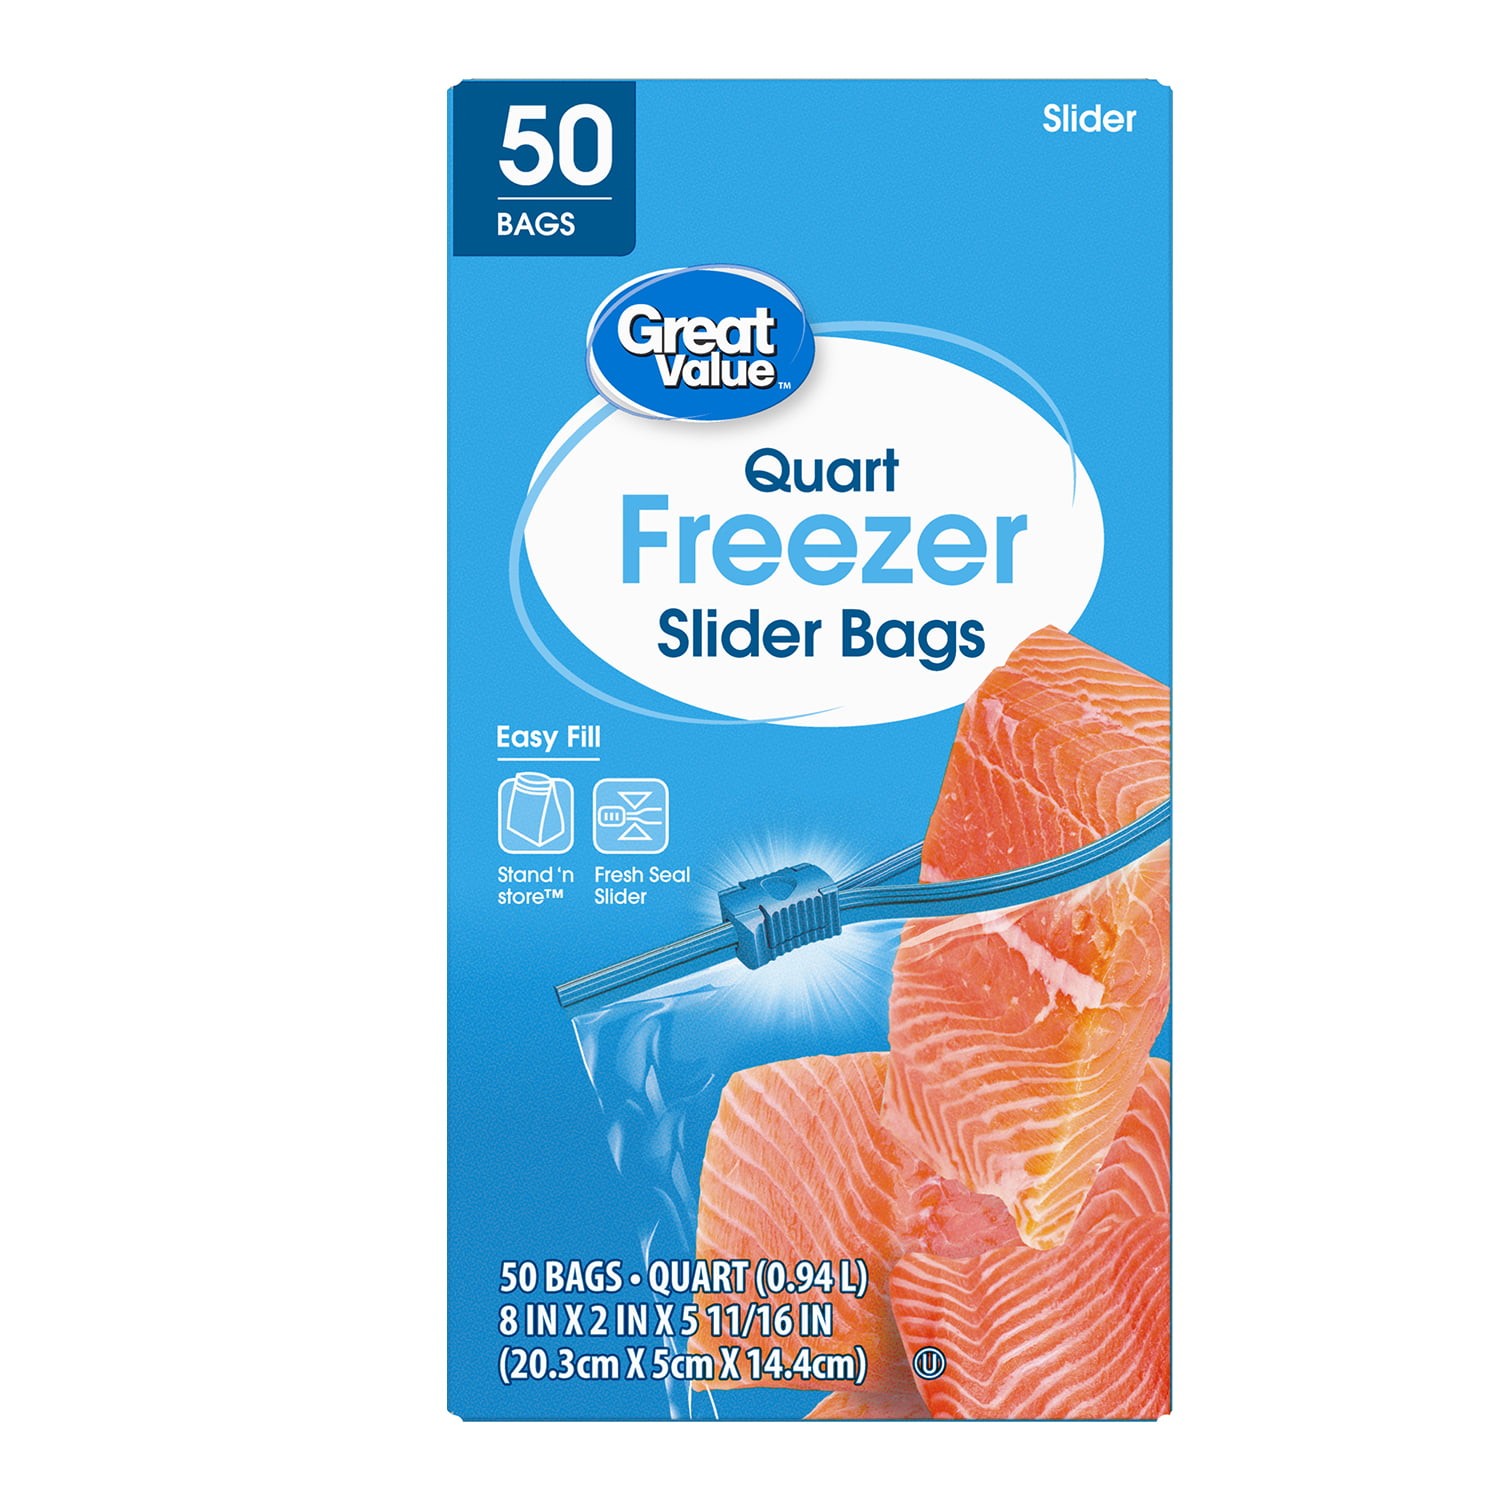 Fresh Seal Slider Freezer Quart Bags